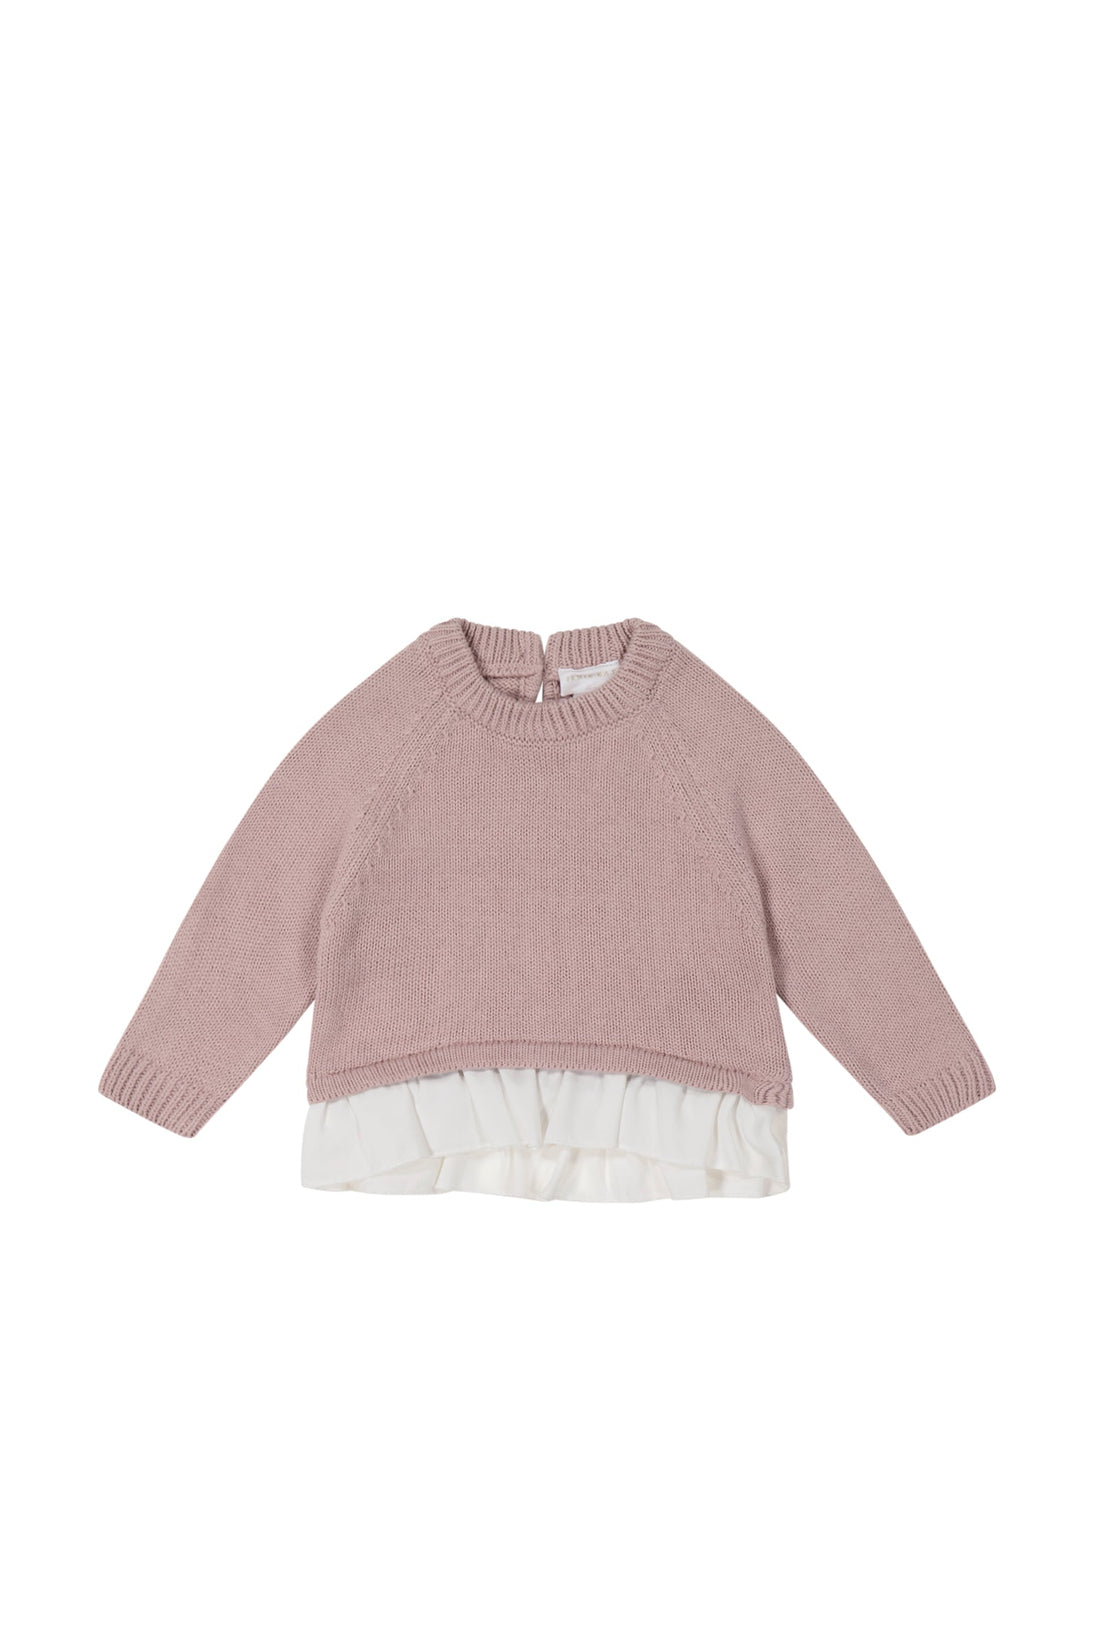 Frill Knit Peysa | Powder Pink